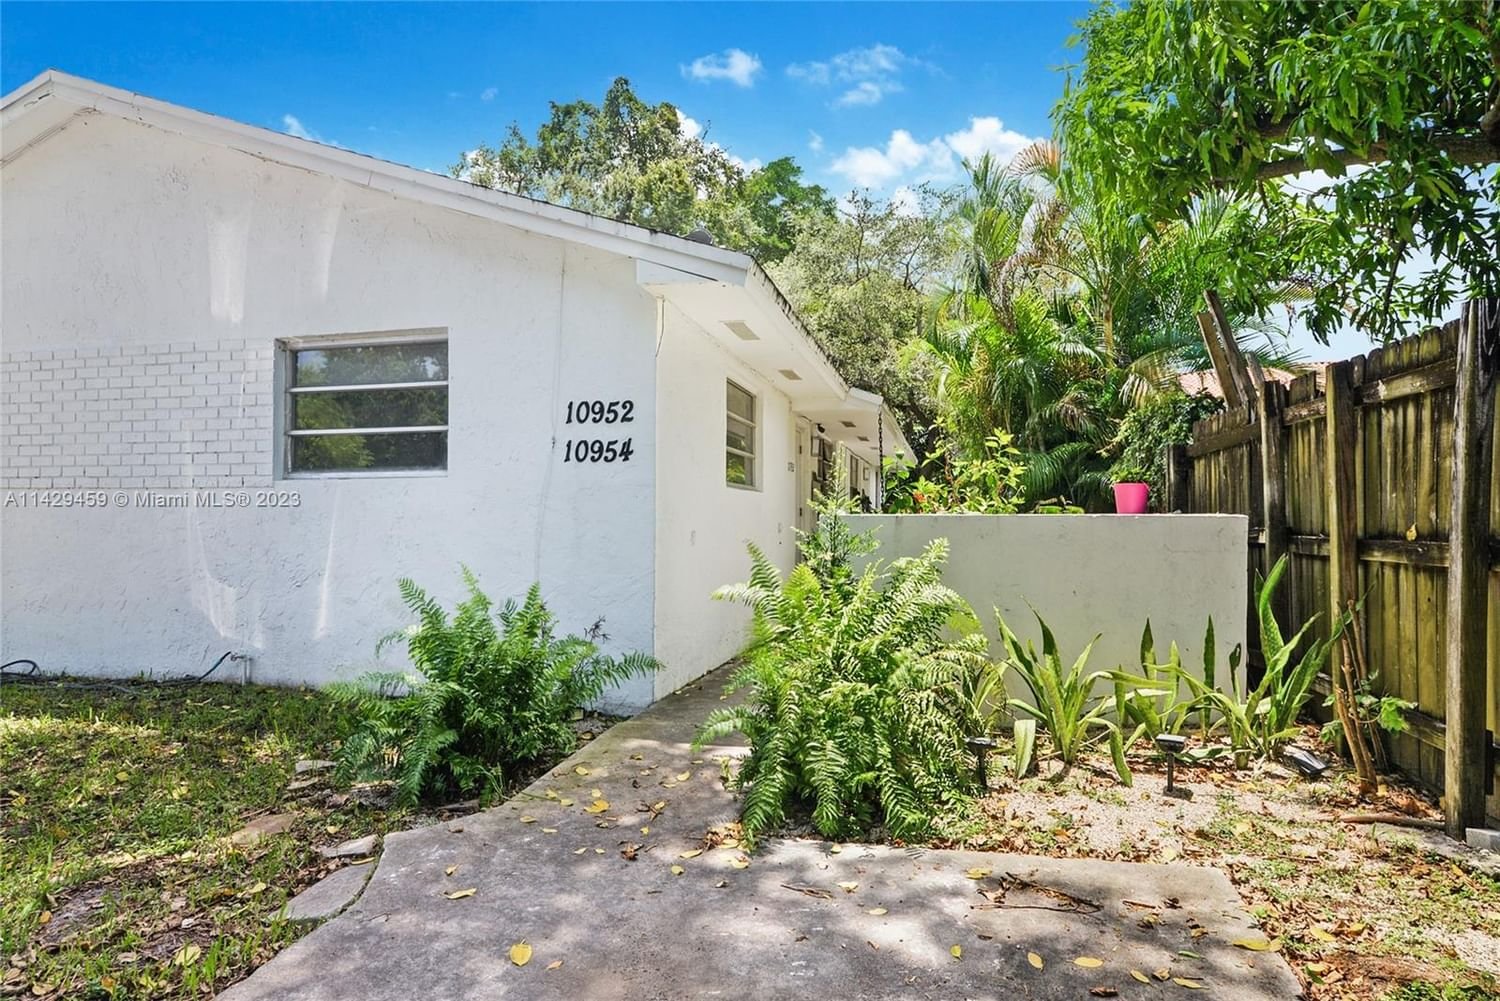 Real estate property located at 10952 3rd Ct, Miami-Dade County, Miami, FL